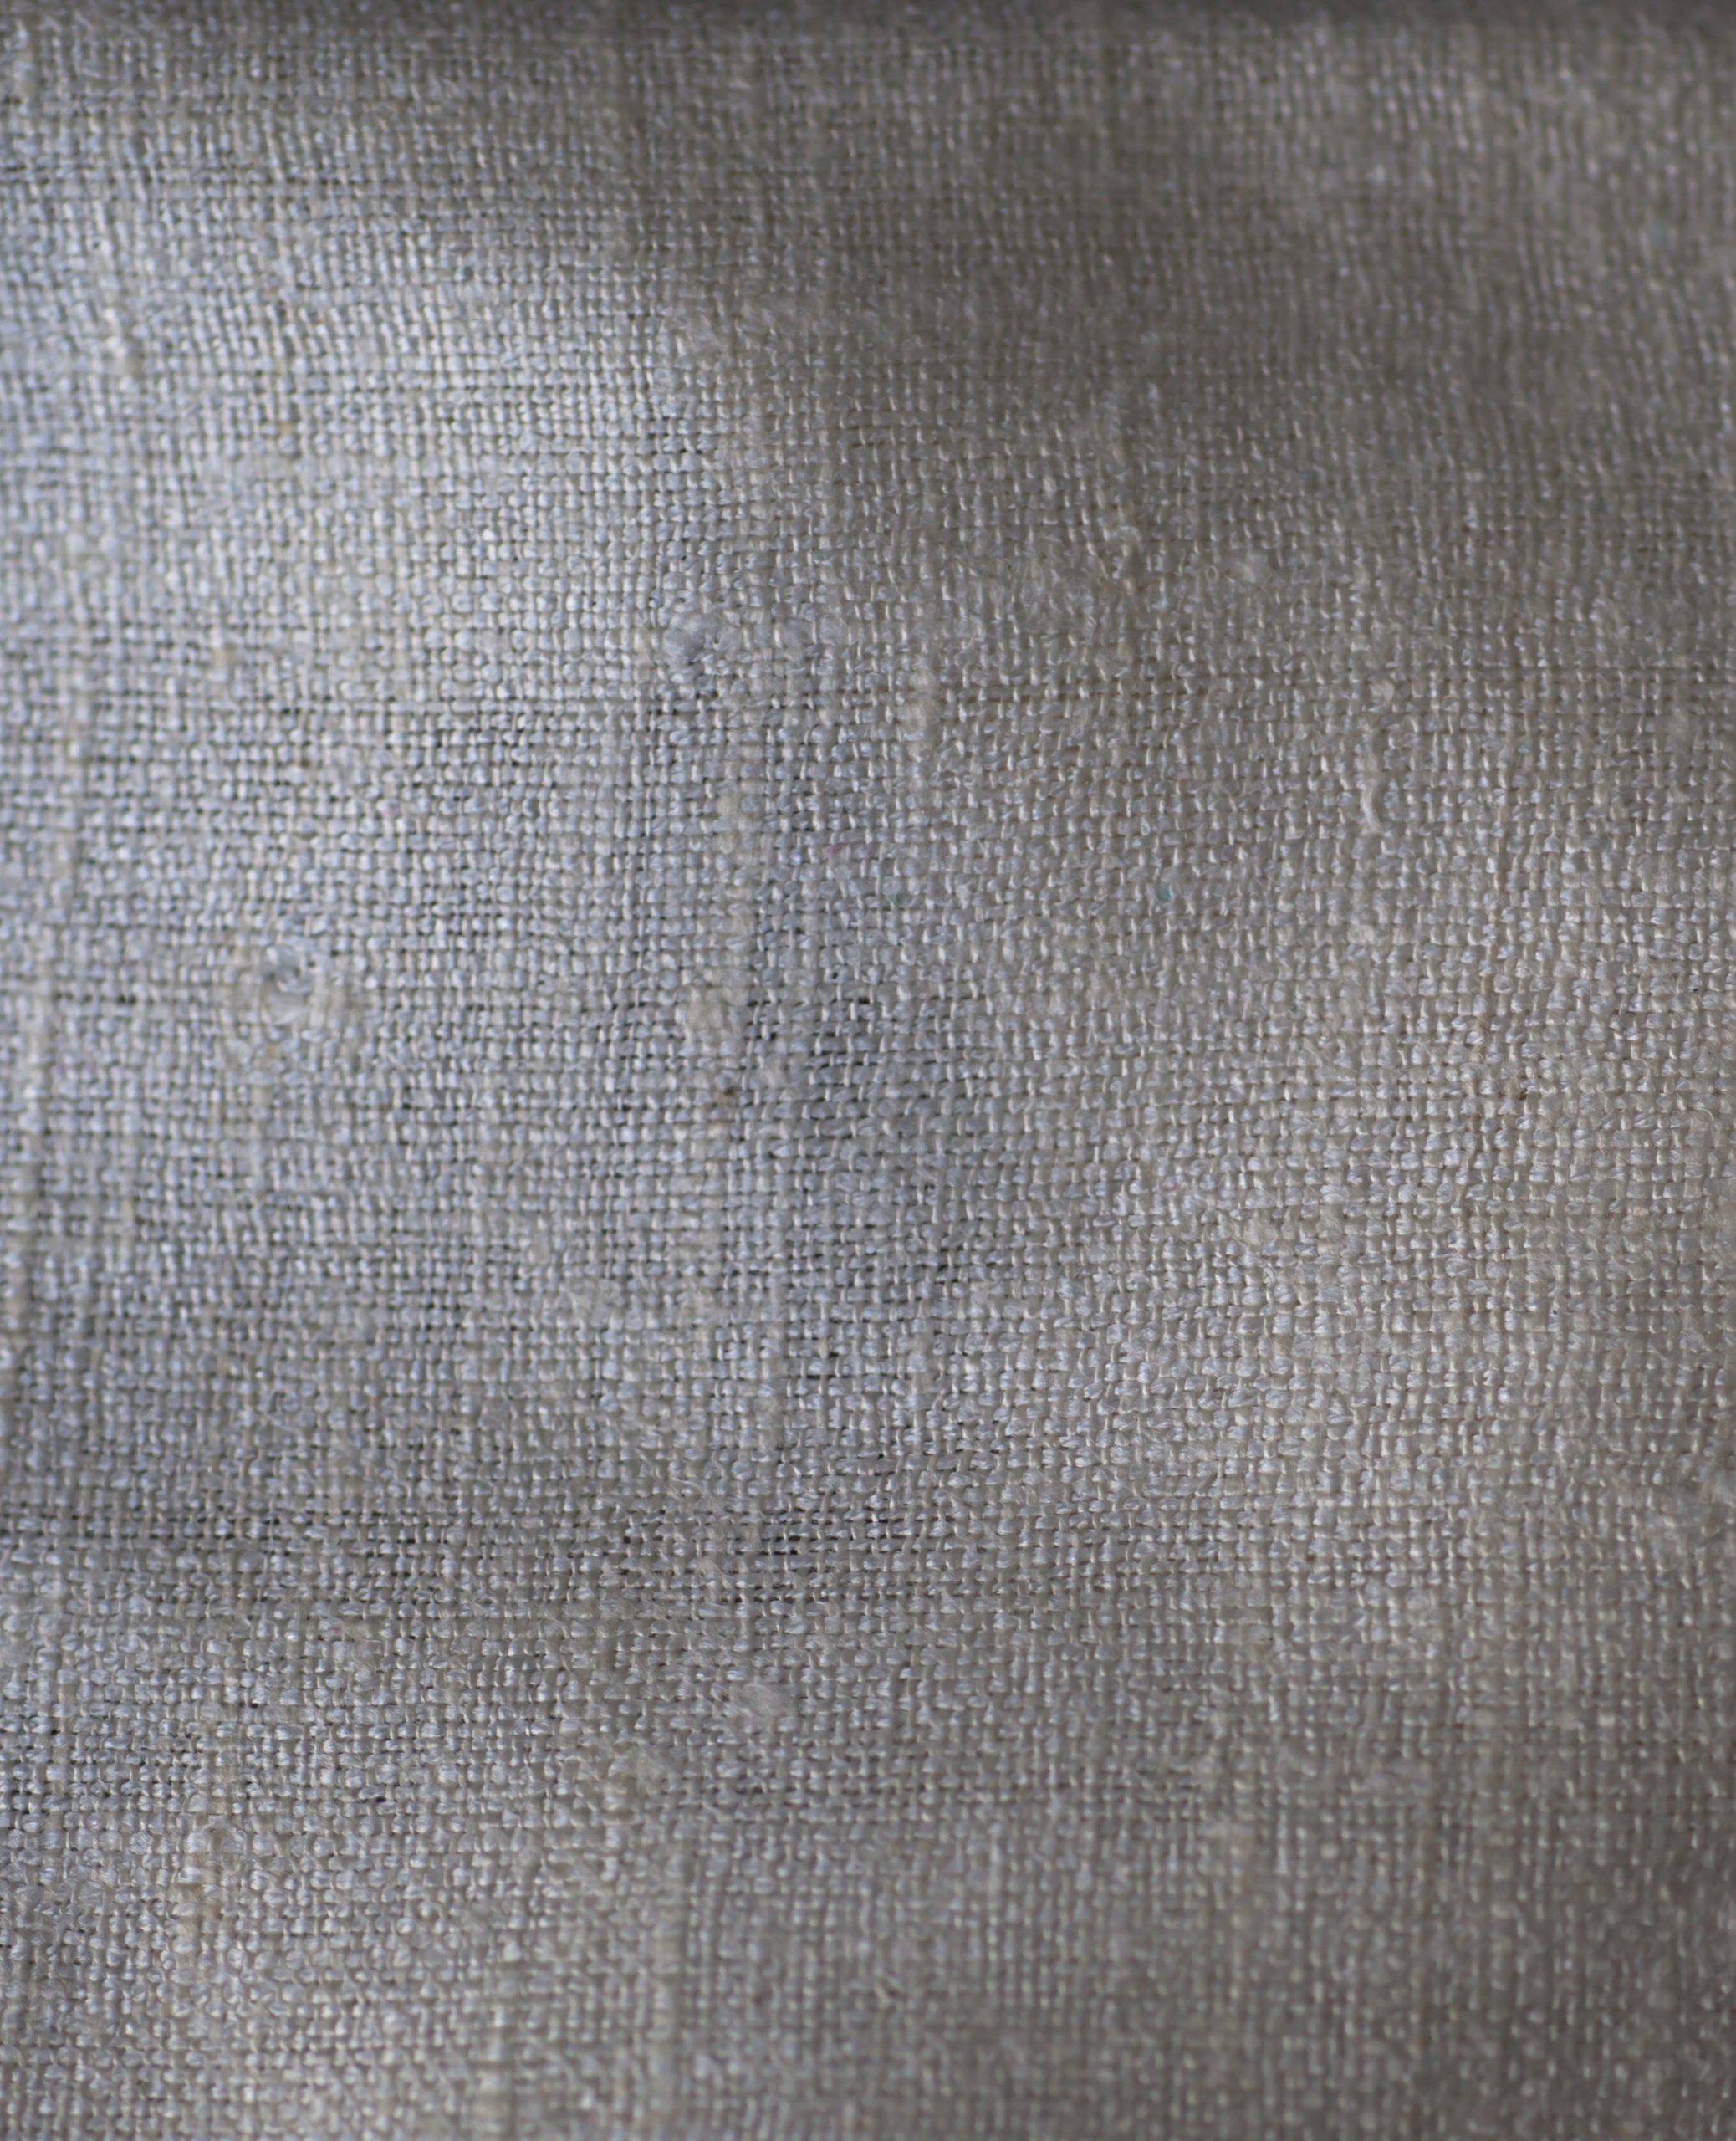 Eri pure ahimsa matka silk fabric 140 cm width - Beautiful Silks